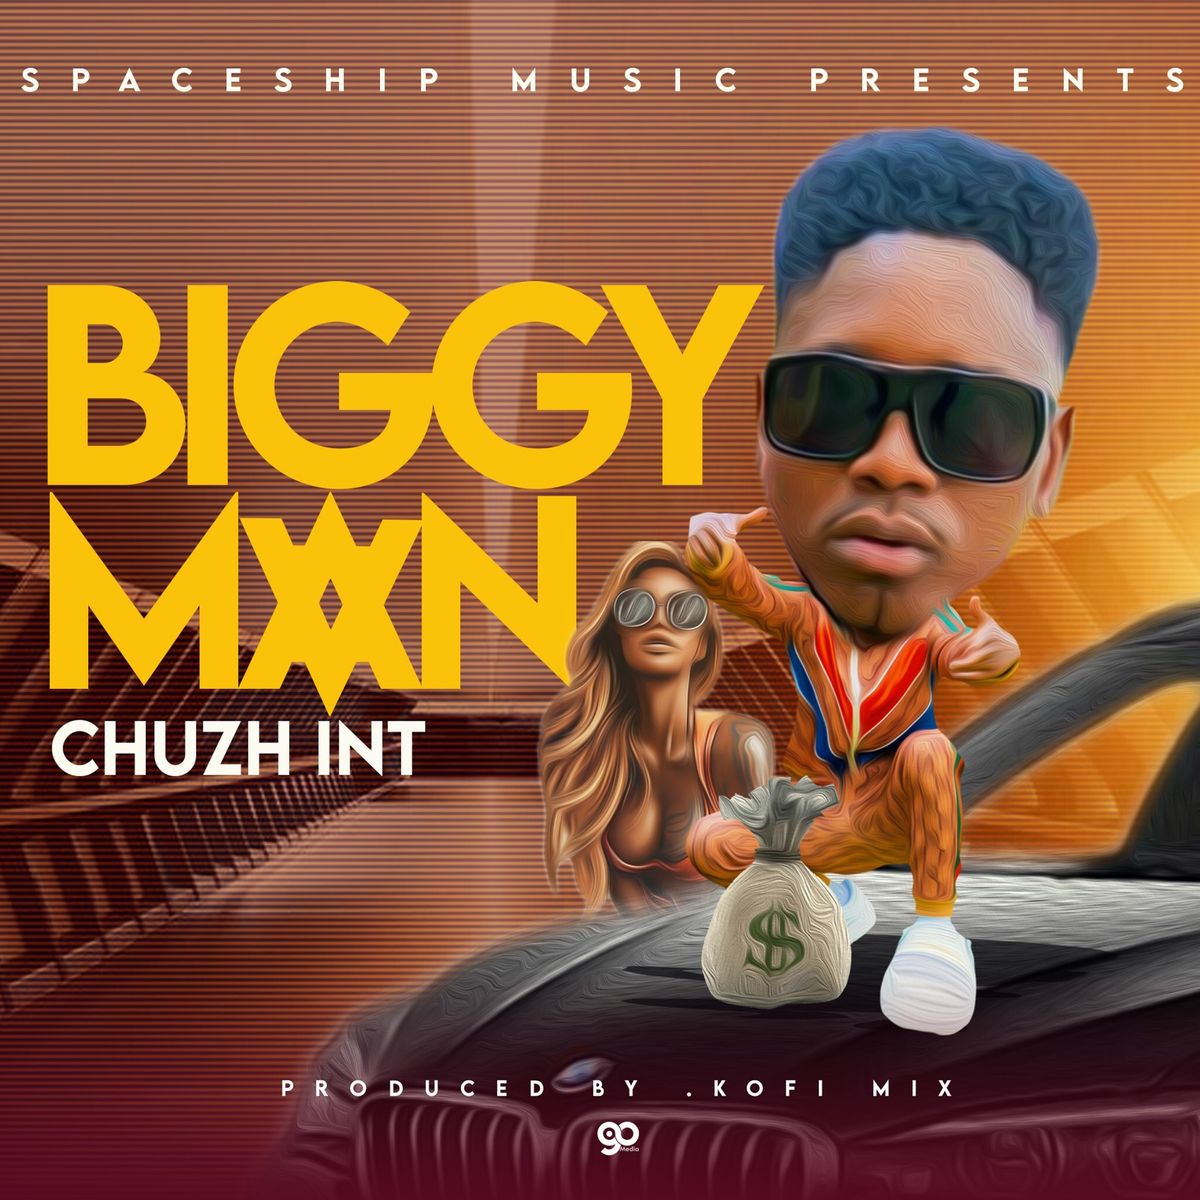 Chuzhe Int - Biggy Man (Prod. Kofi Mix)